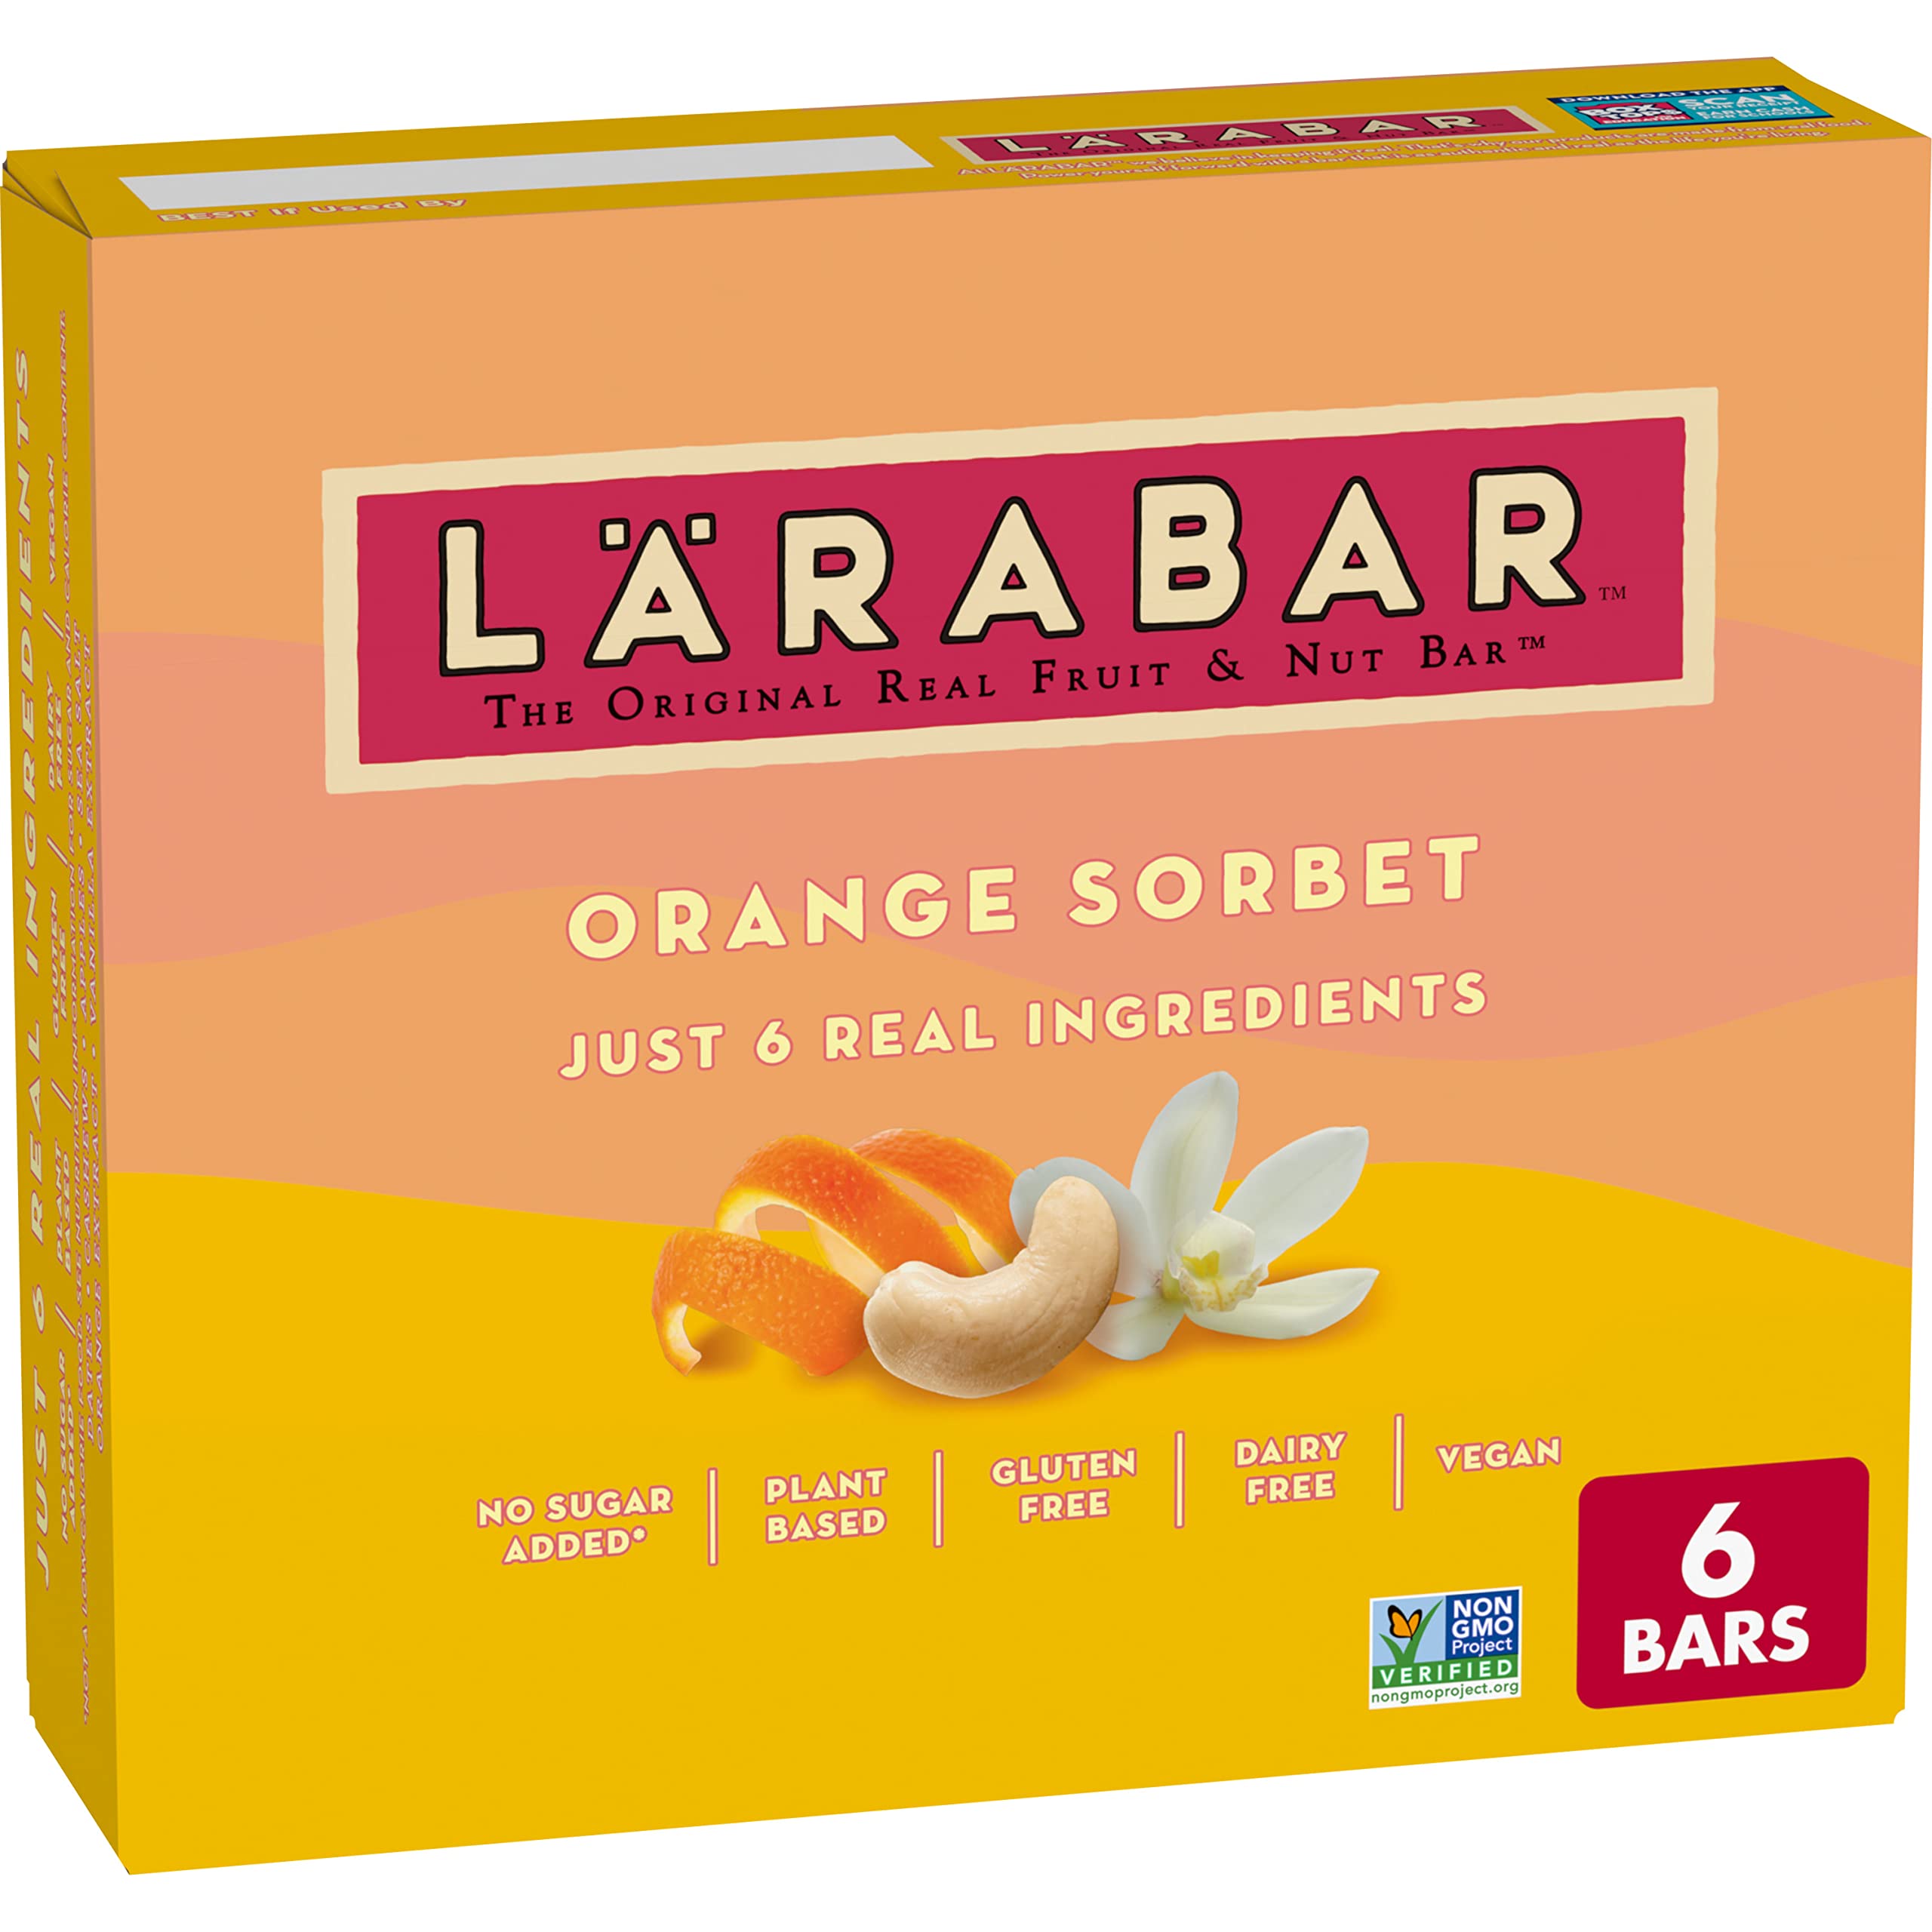 LÄRABAR Orange Sorbet Bars, Gluten Free Vegan, 6 ct $6.07